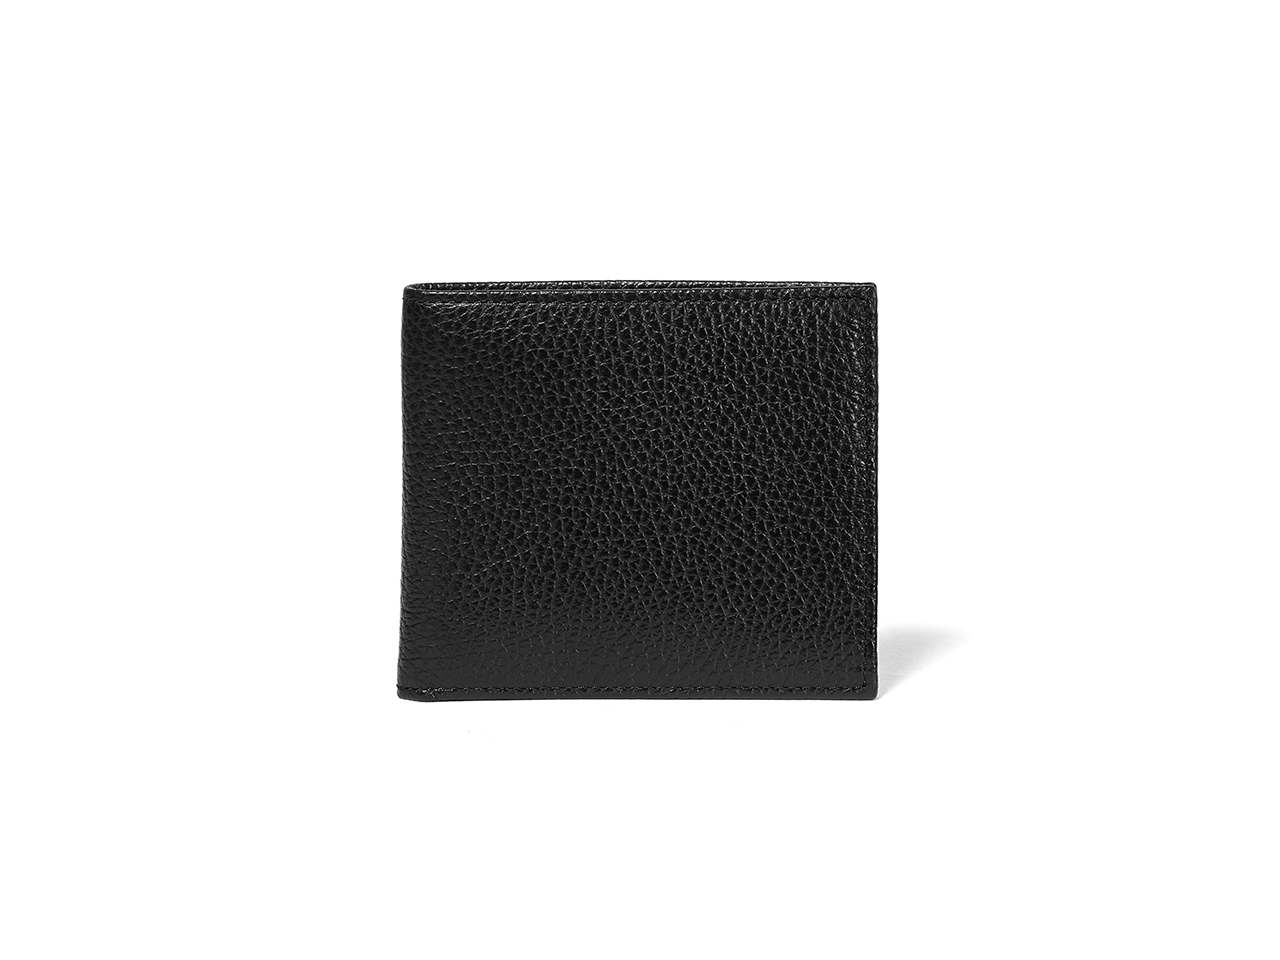 Men’s wallet, leather wallet